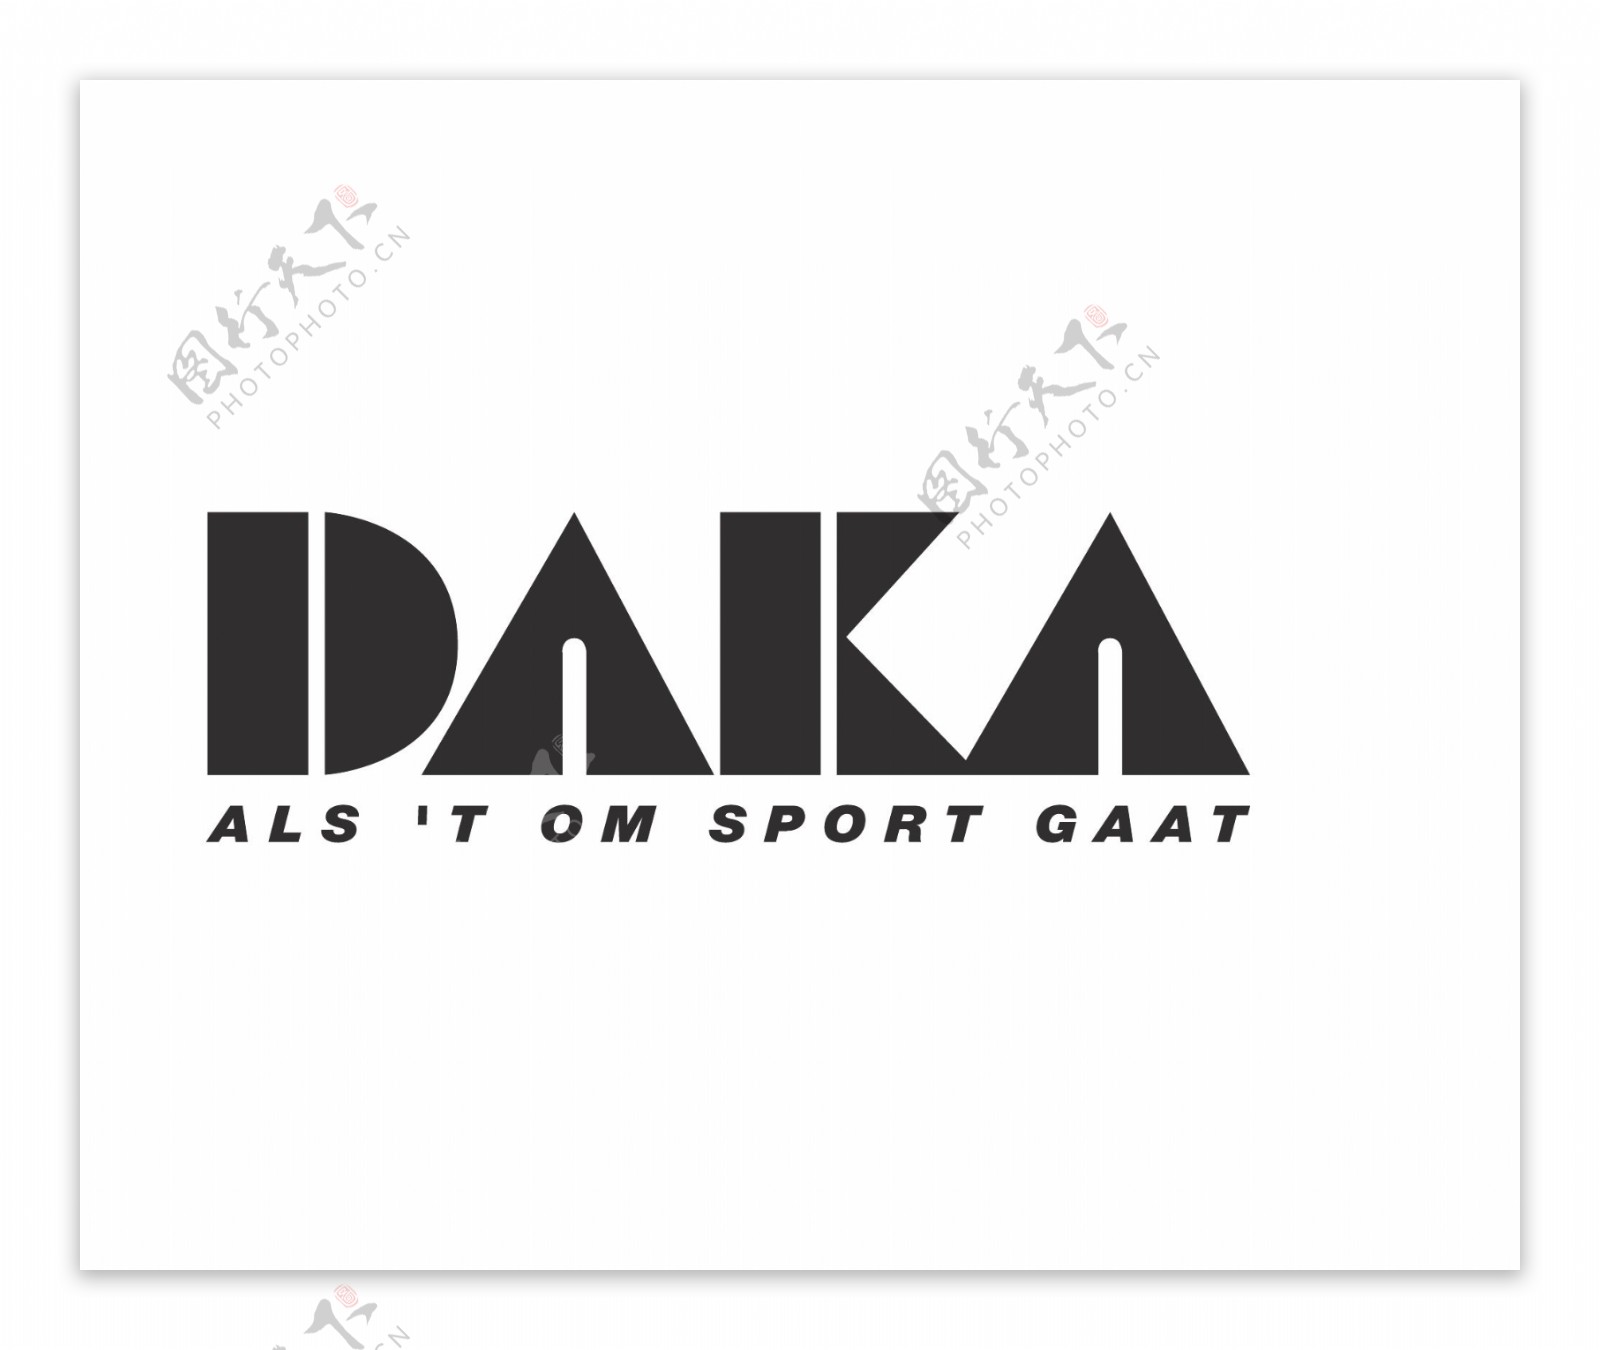 DakaSportlogo设计欣赏DakaSport运动赛事LOGO下载标志设计欣赏